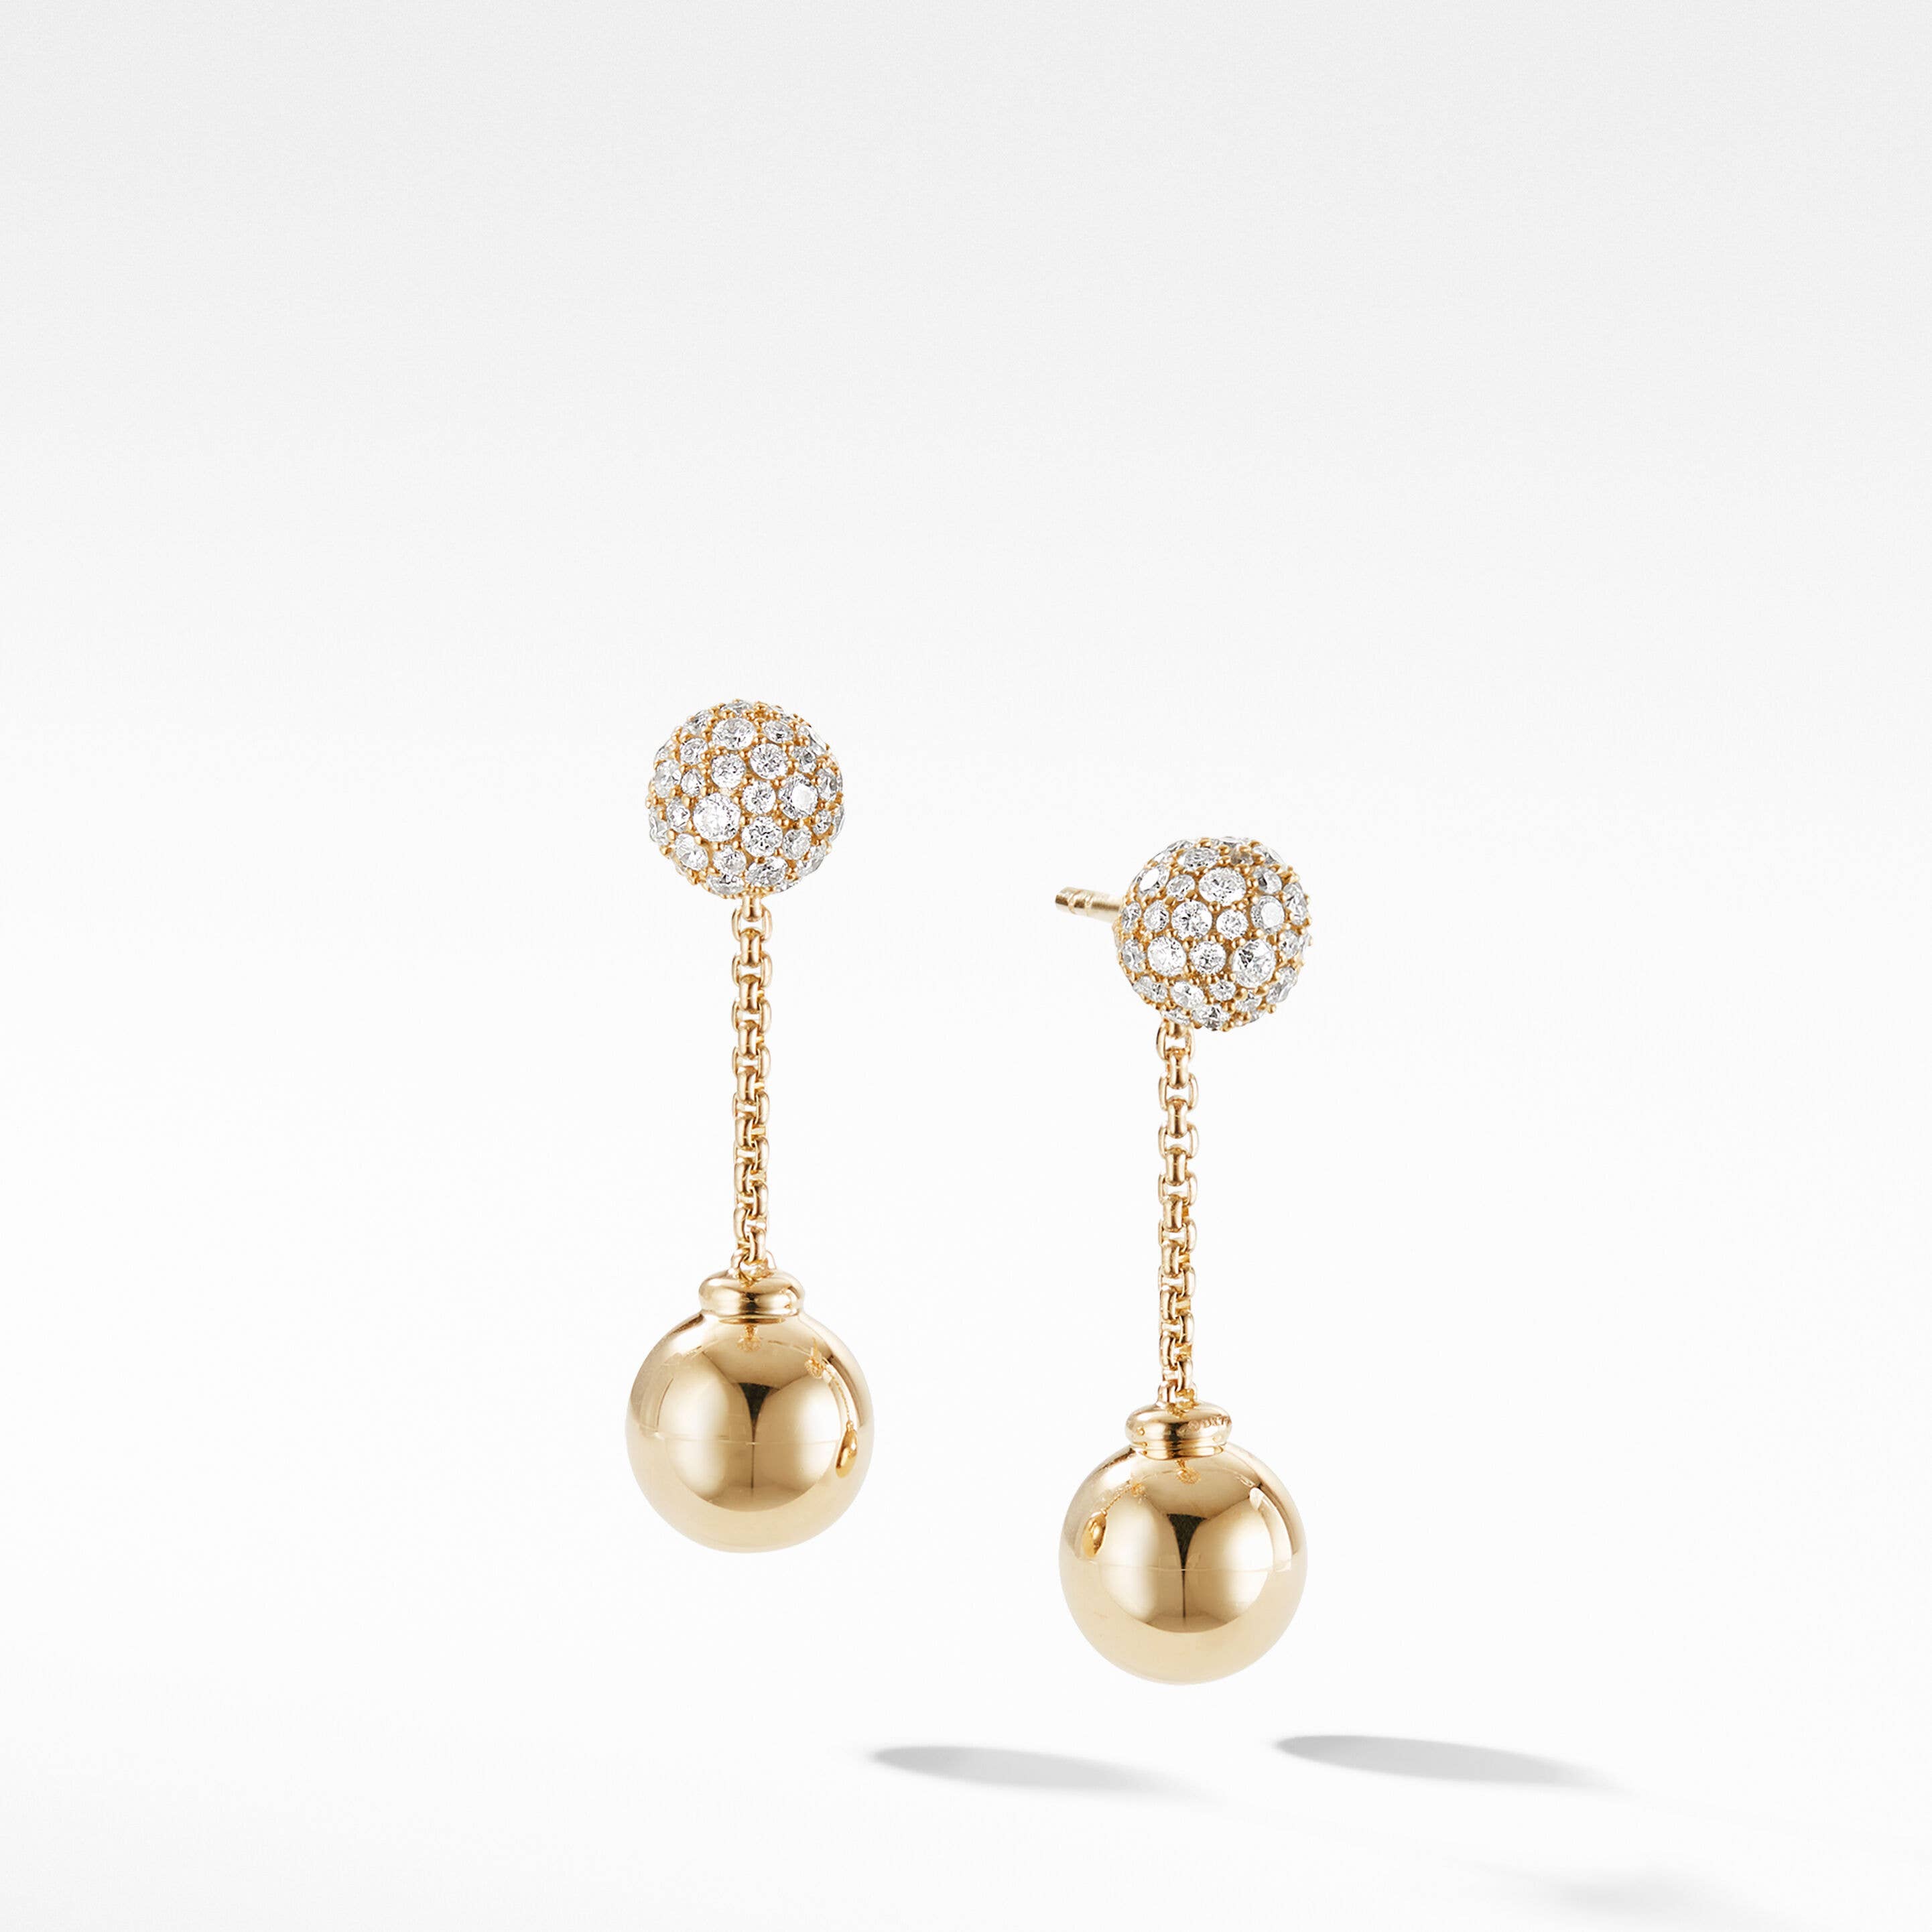 Solari Chain Drop Earrings in 18K Yellow Gold with Pavé Diamonds